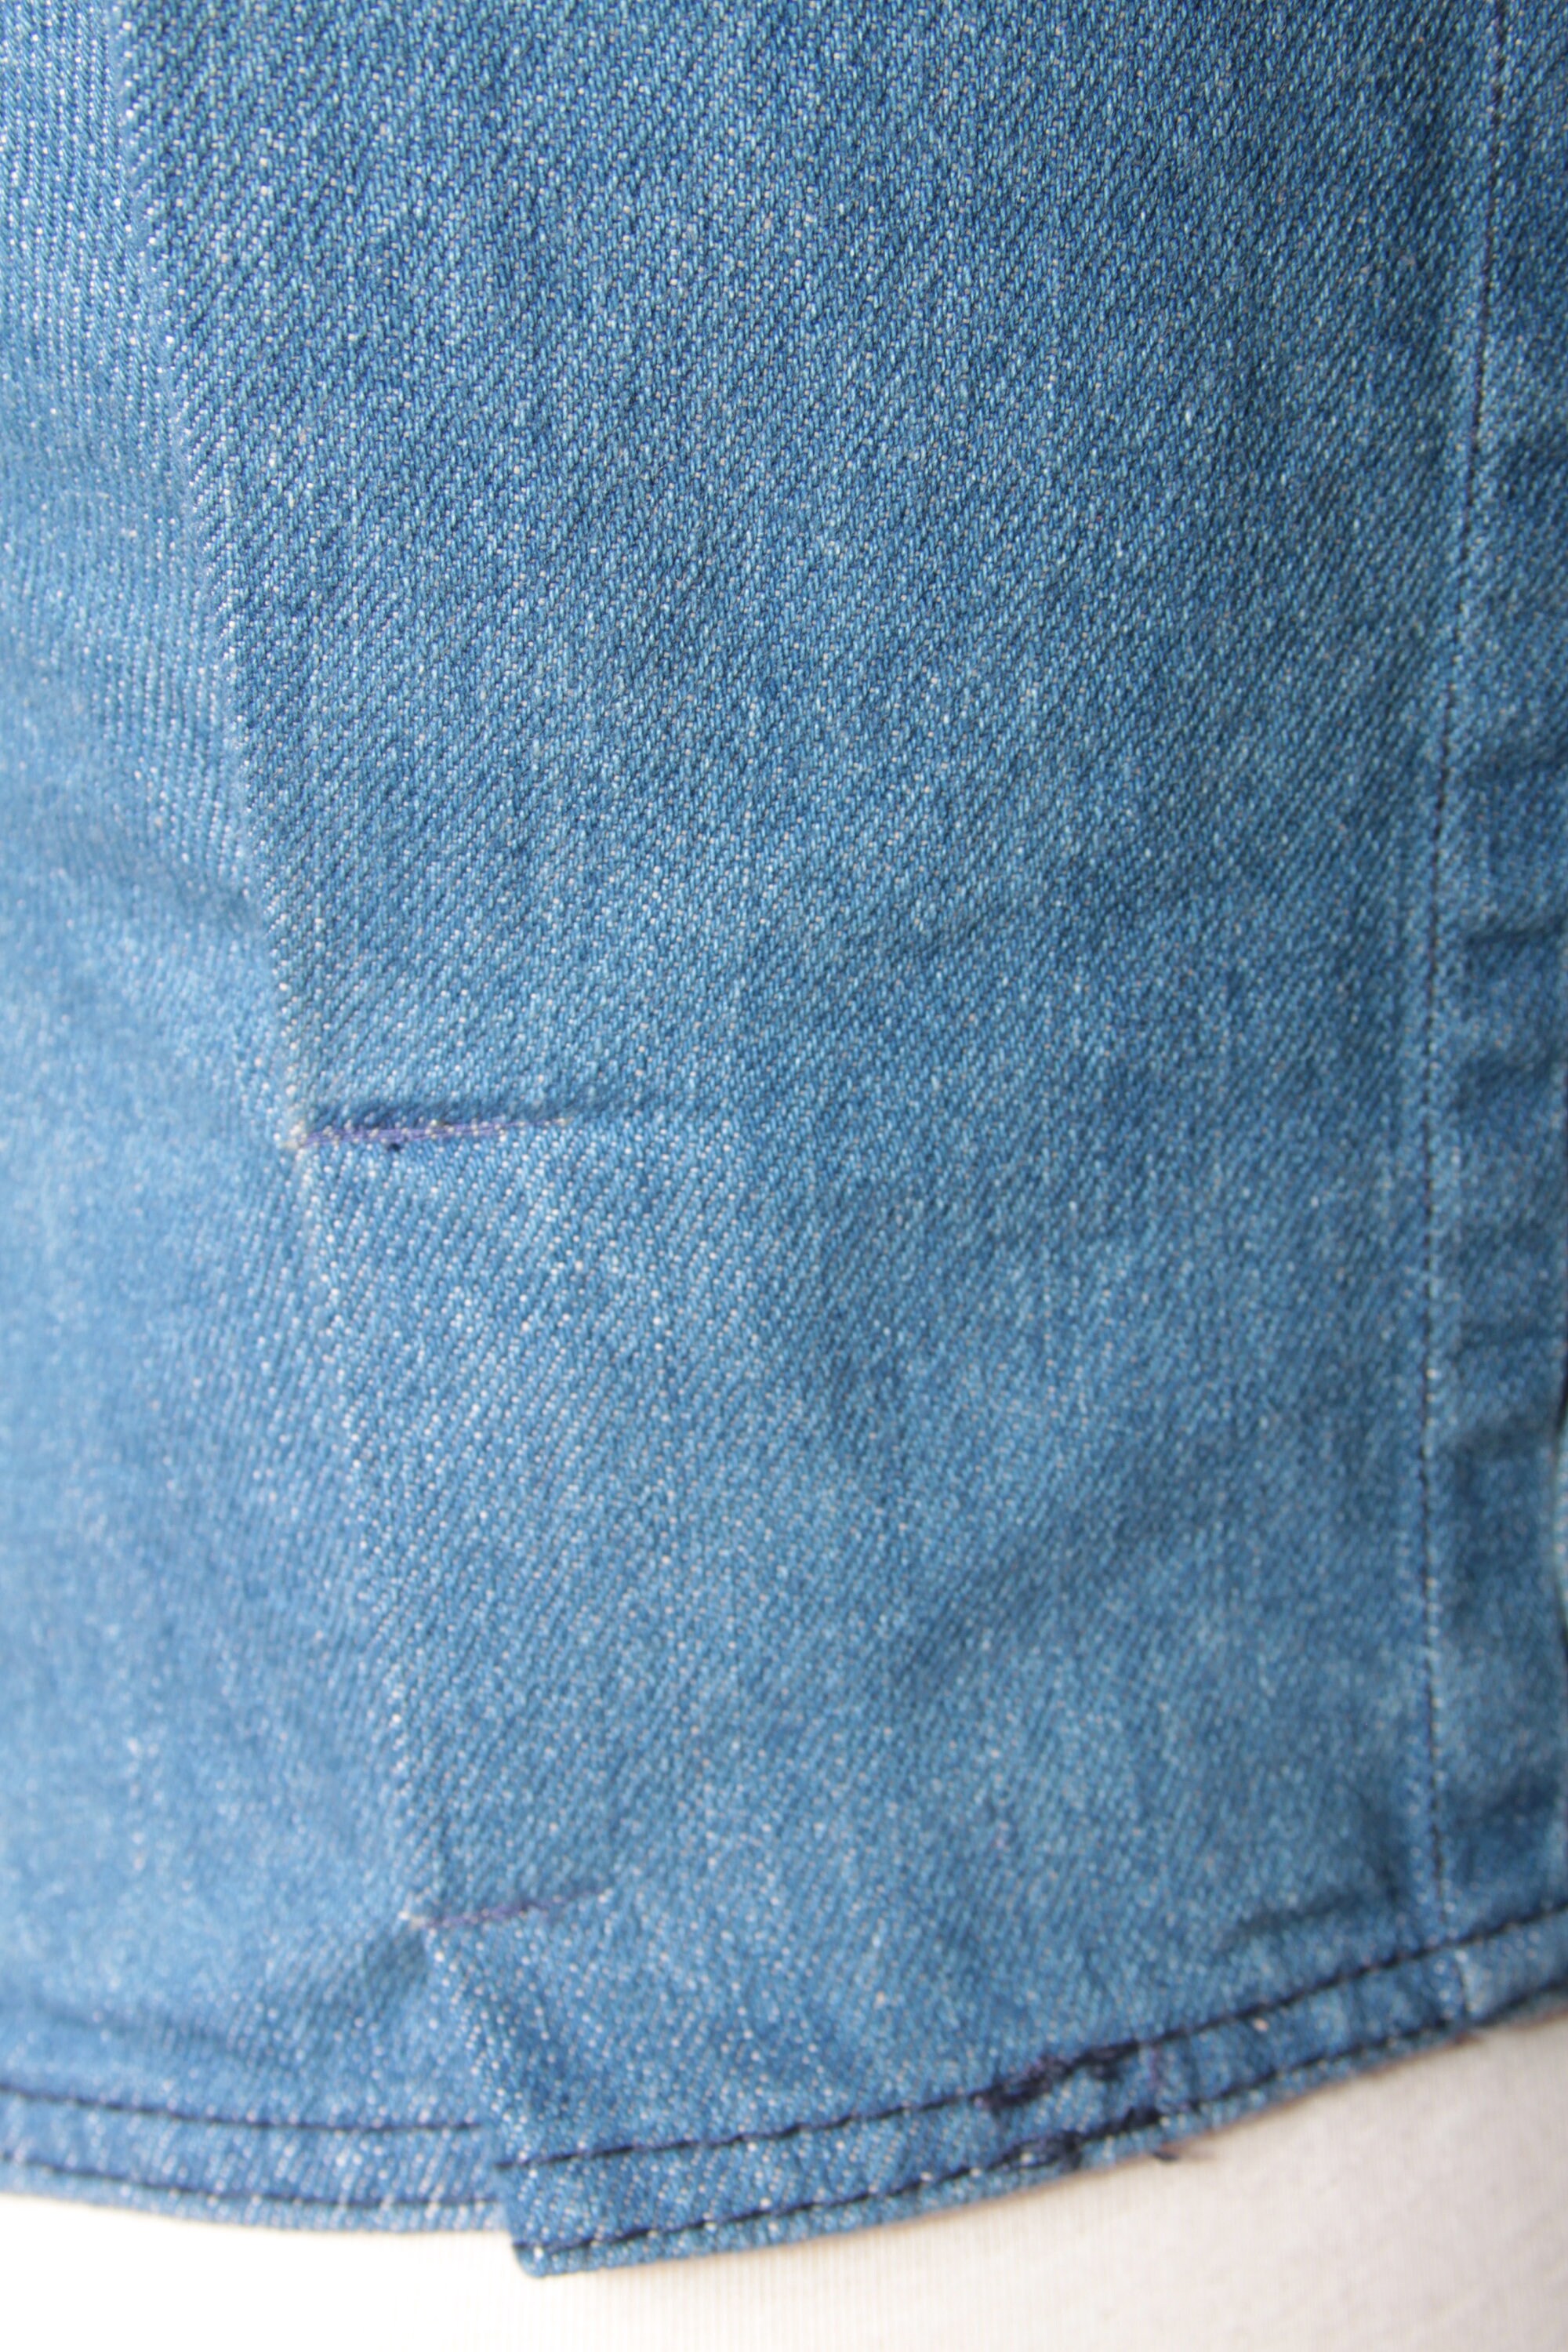 Blue Jeans 70s Vest Small Pocket Fake Pockets Be Bop | Etsy